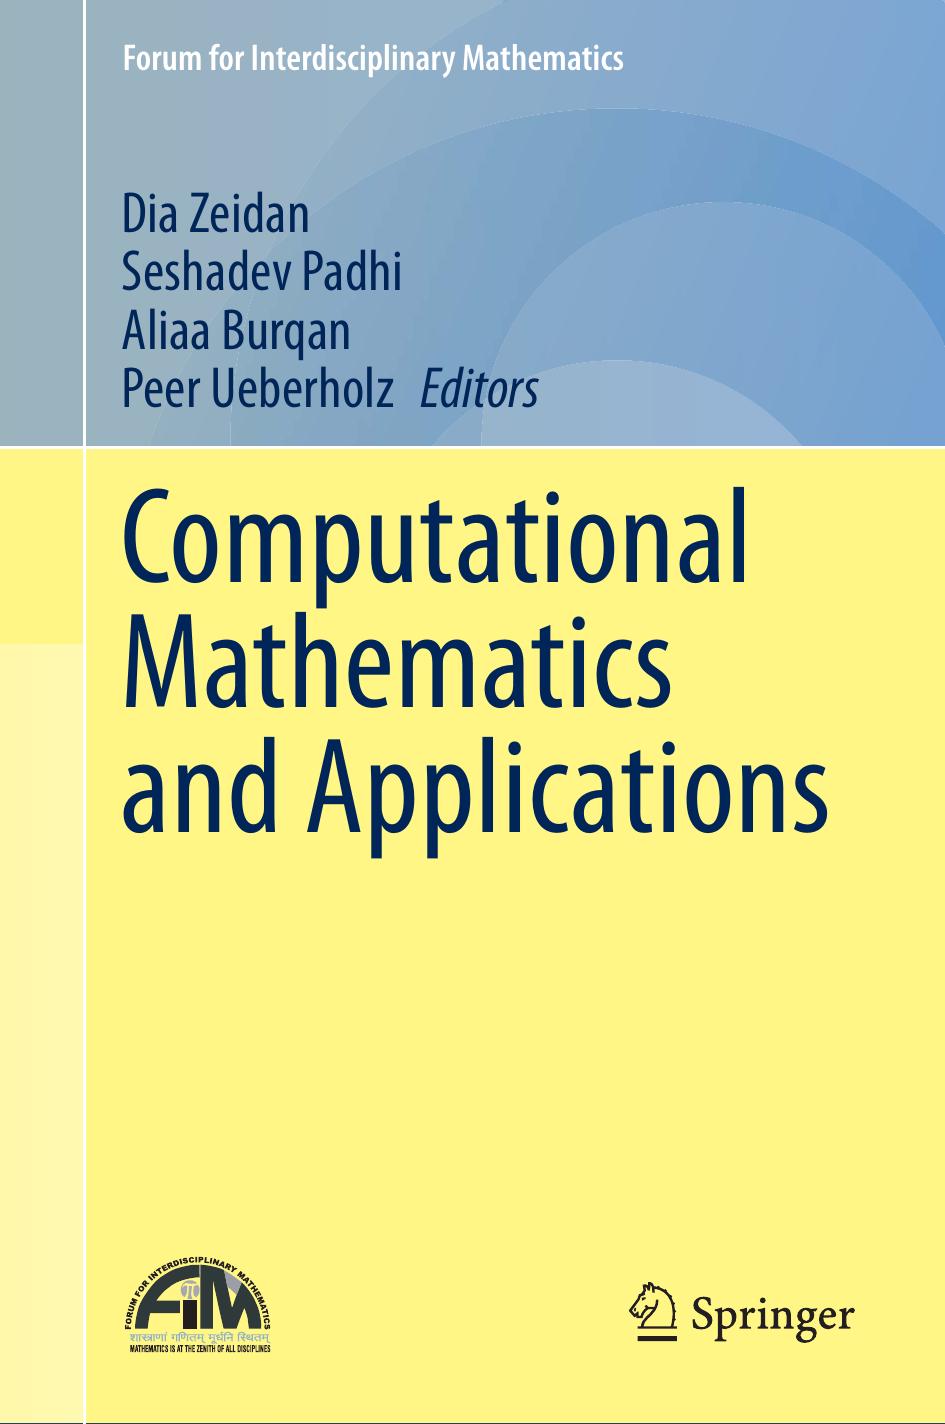 Computational Mathematics and Applications